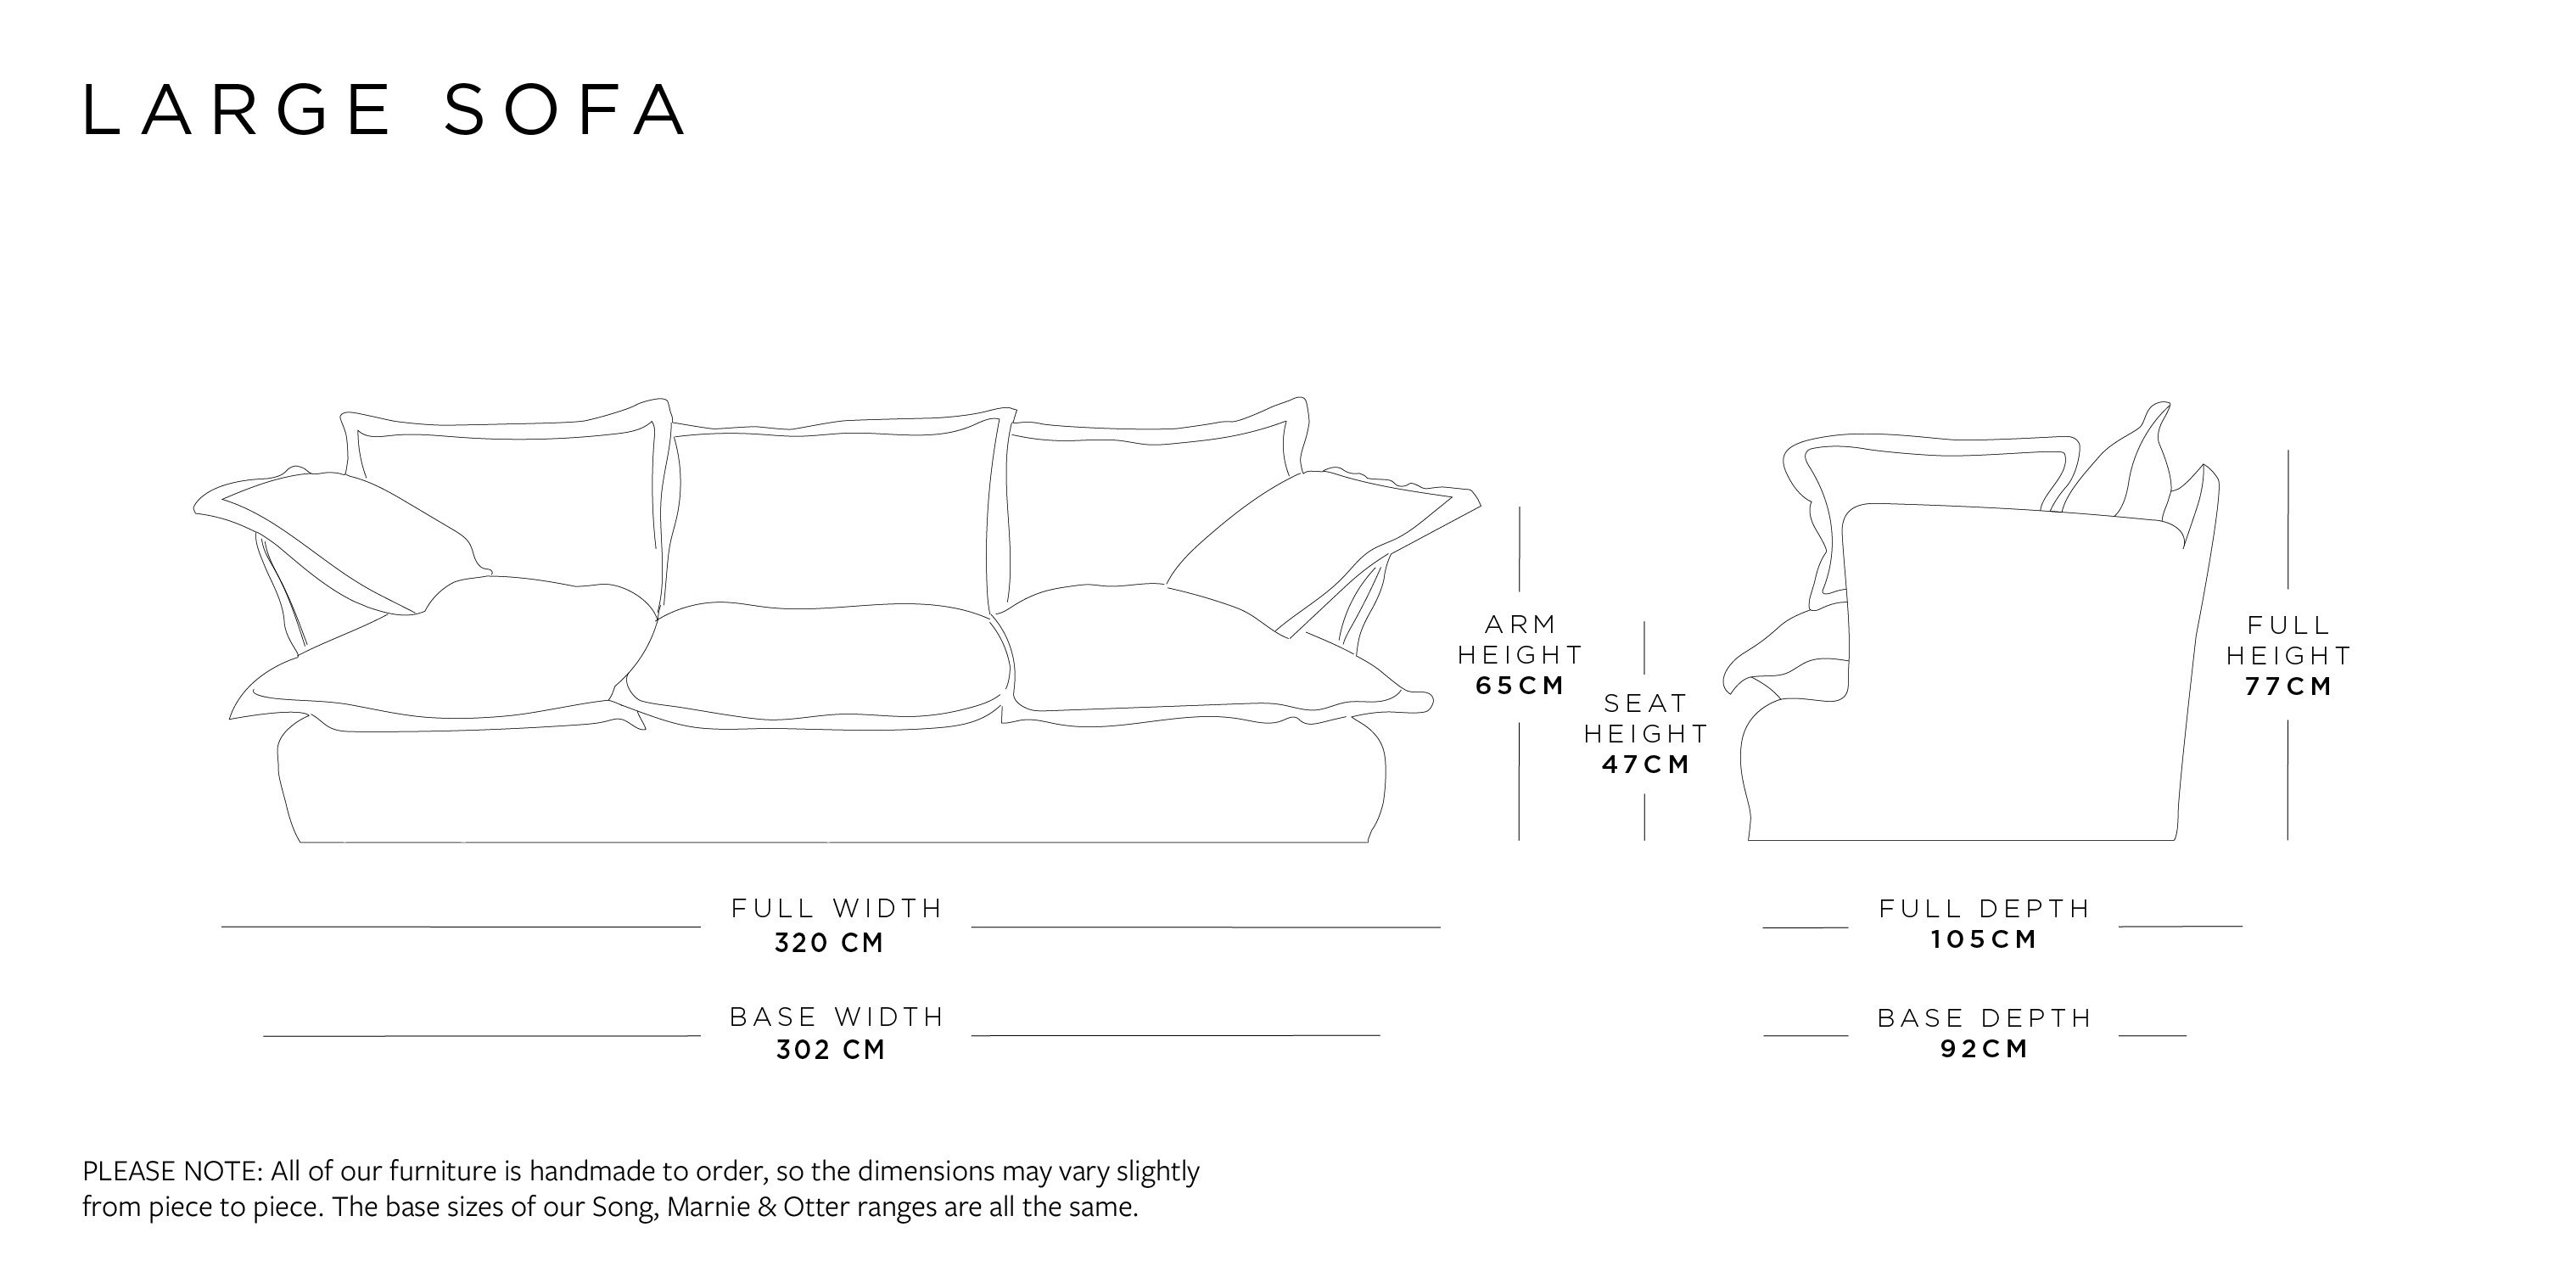 Large Sofa | Marnie Range Size Guide